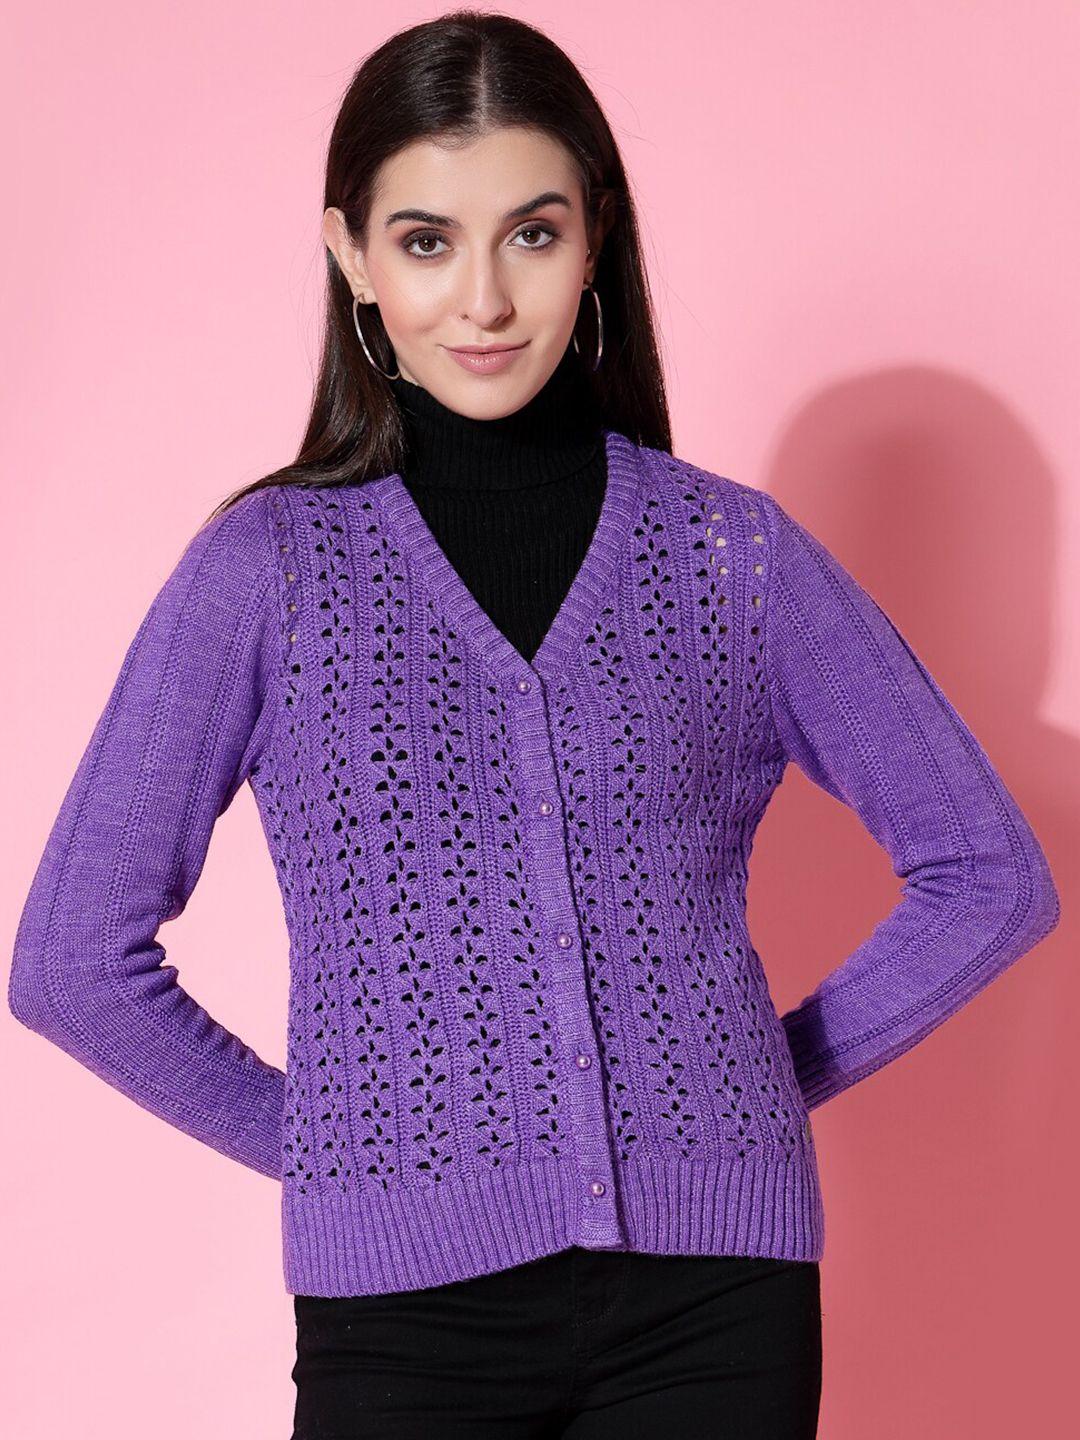 wool trees open knit self design v-neck acrylic cardigan sweater